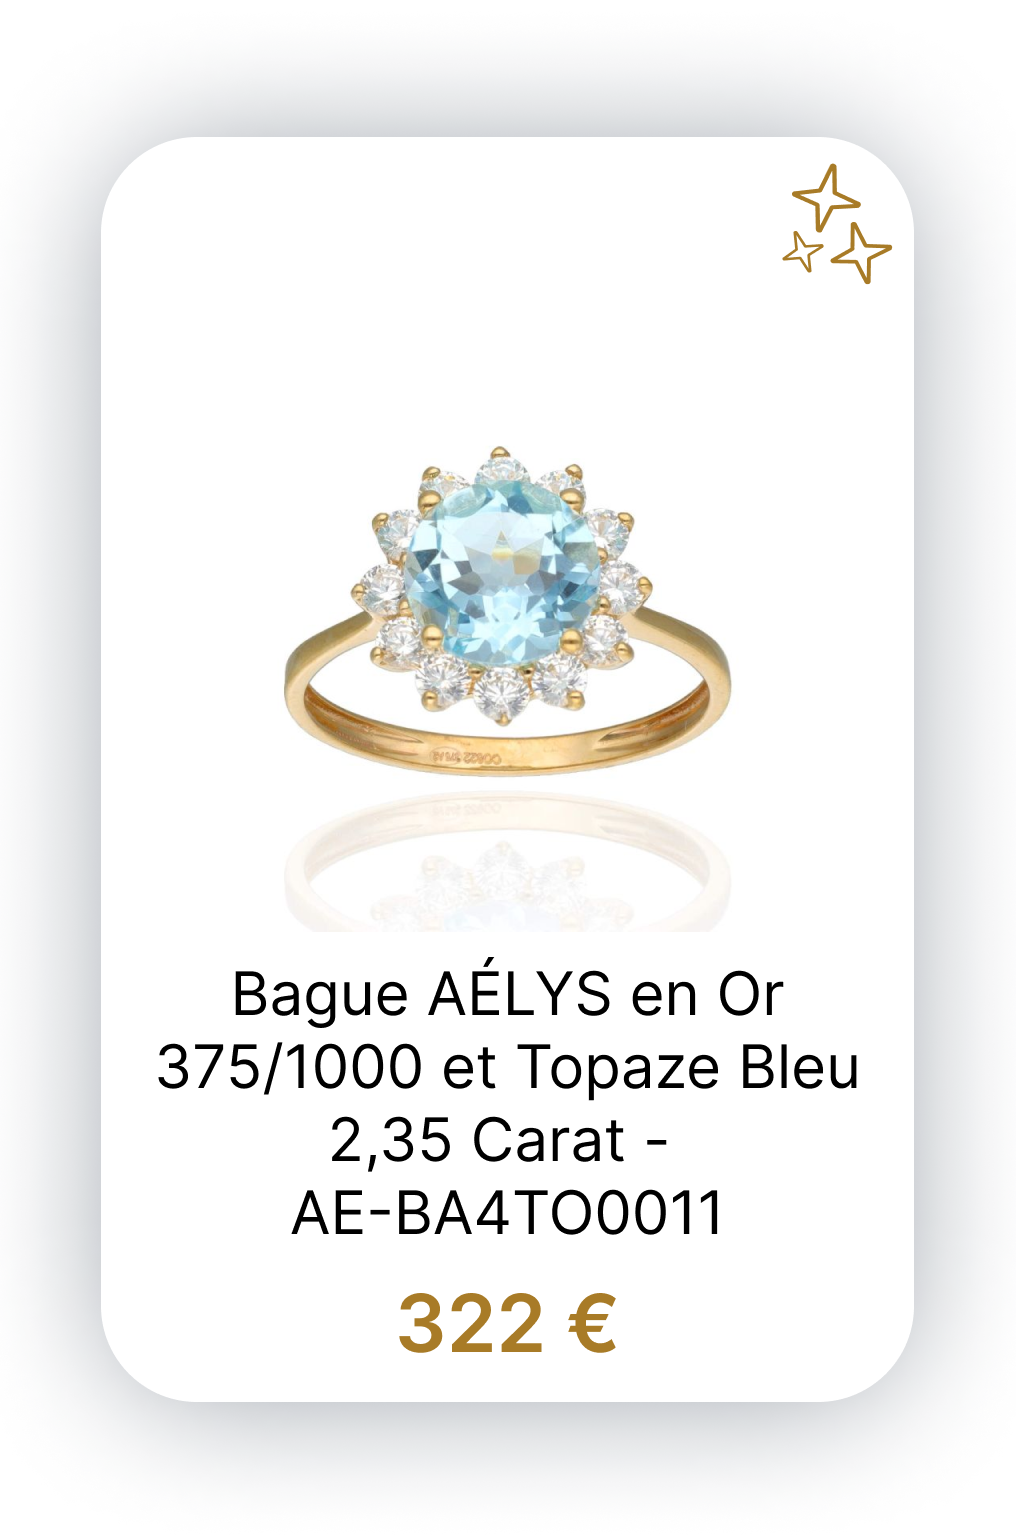 Bague AÉLYS en Or 375 1000 et Topaze Bleu 2,35 Carat - AE-BA4TO0011.png